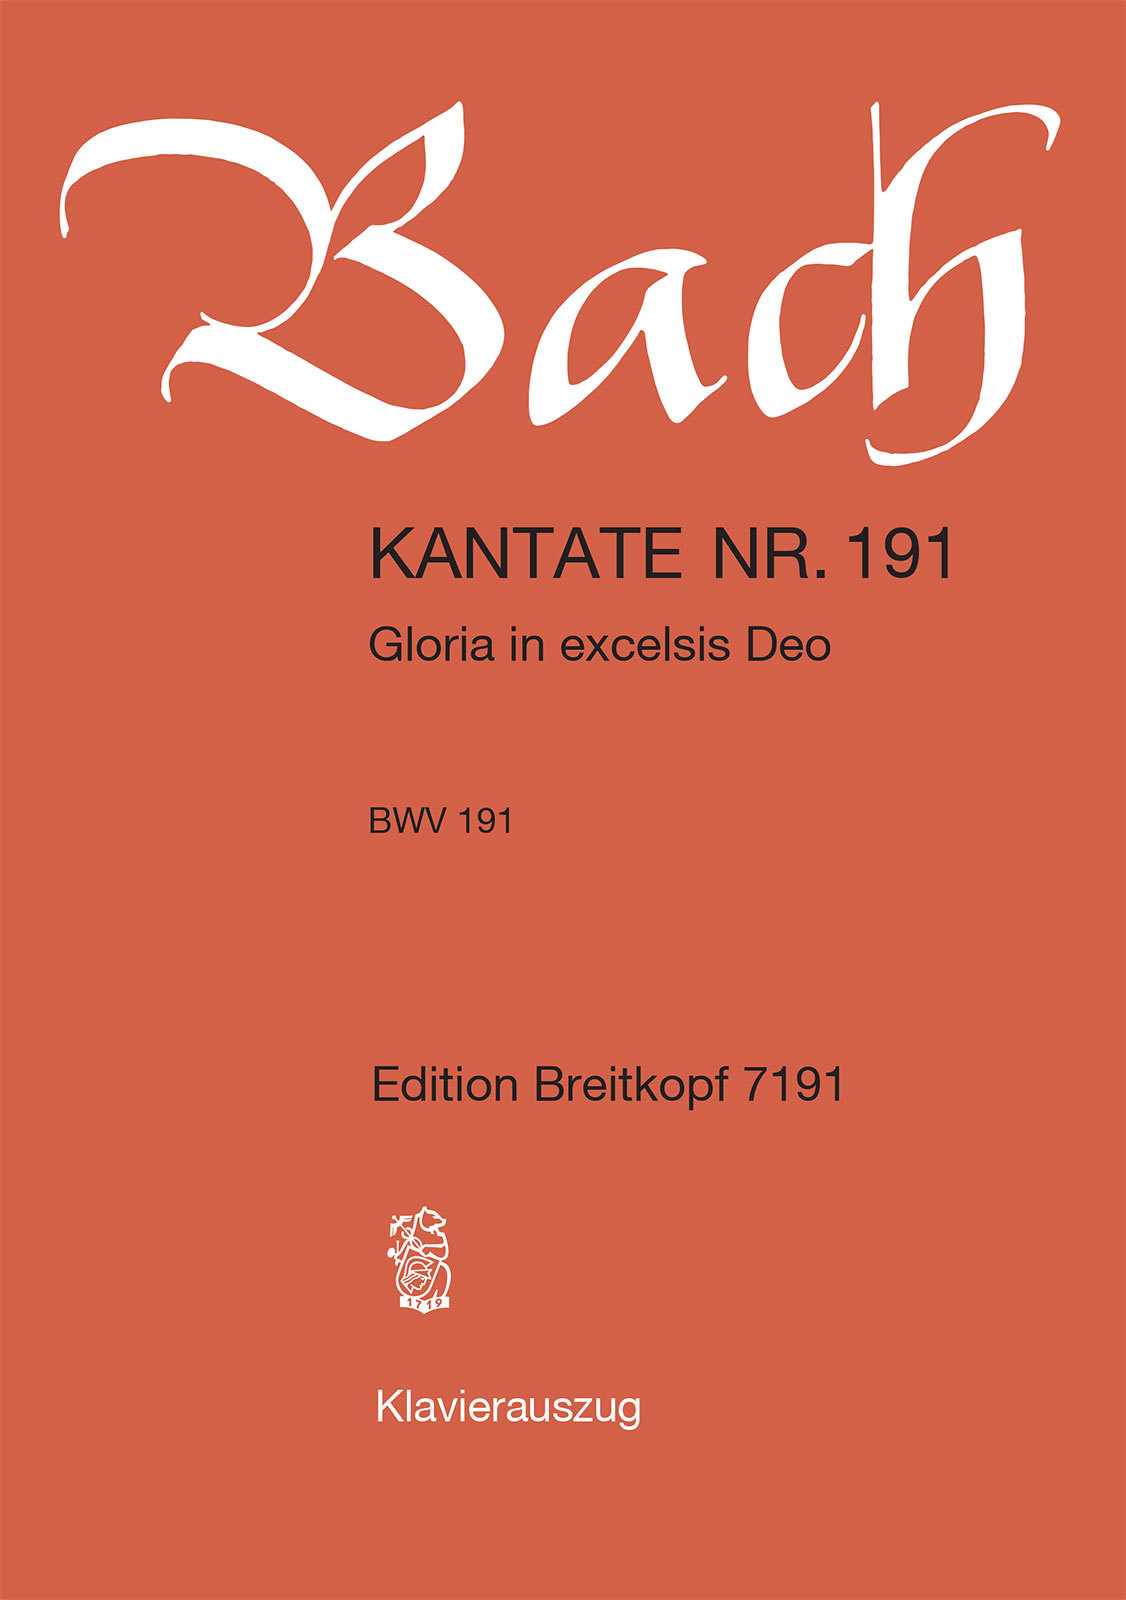 J. S. Bach - KANTATE BWV 191 GLORIA IN EXCELSIS DEO, KLAVIERAUSZUG